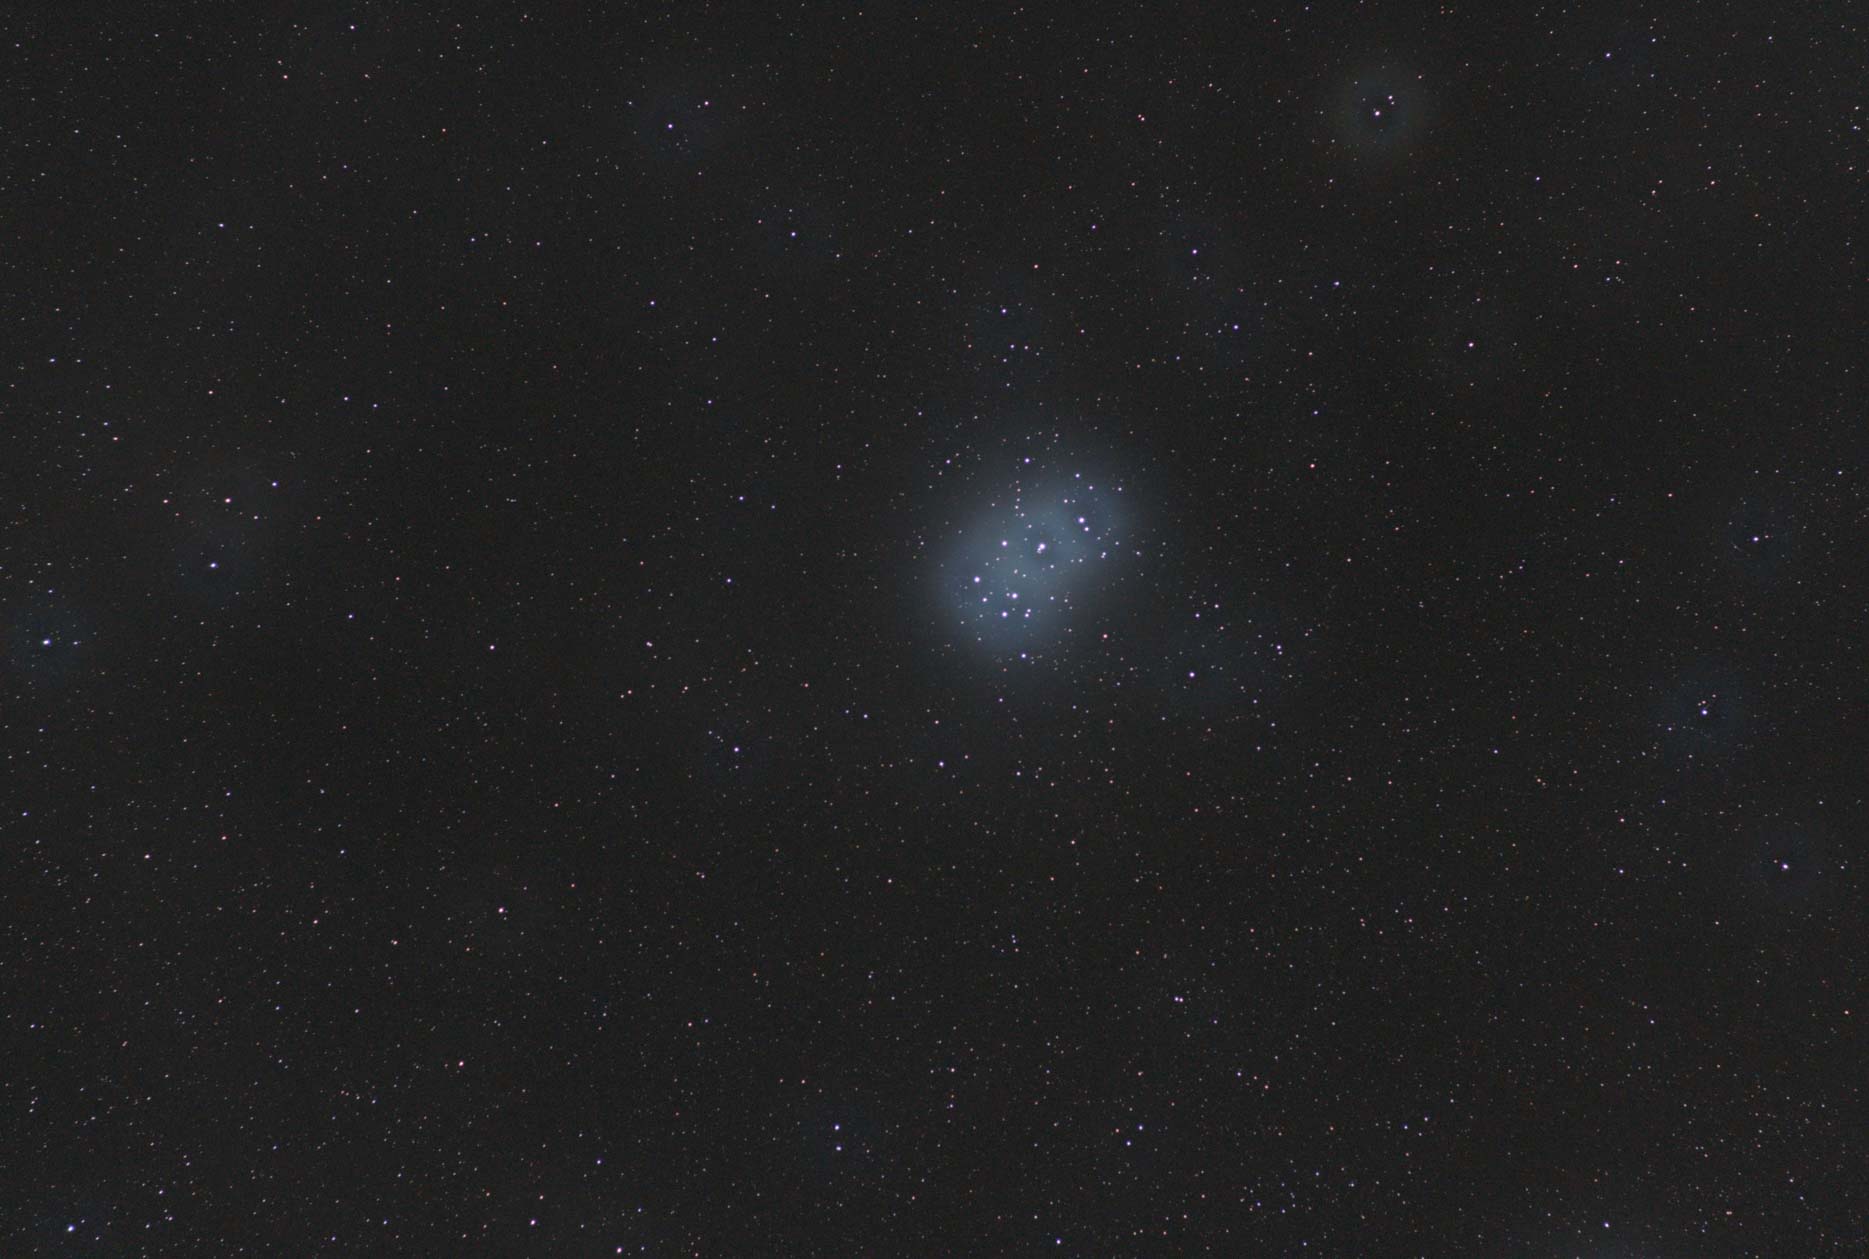 20200127-20200128 Messier 45, or Pleiades